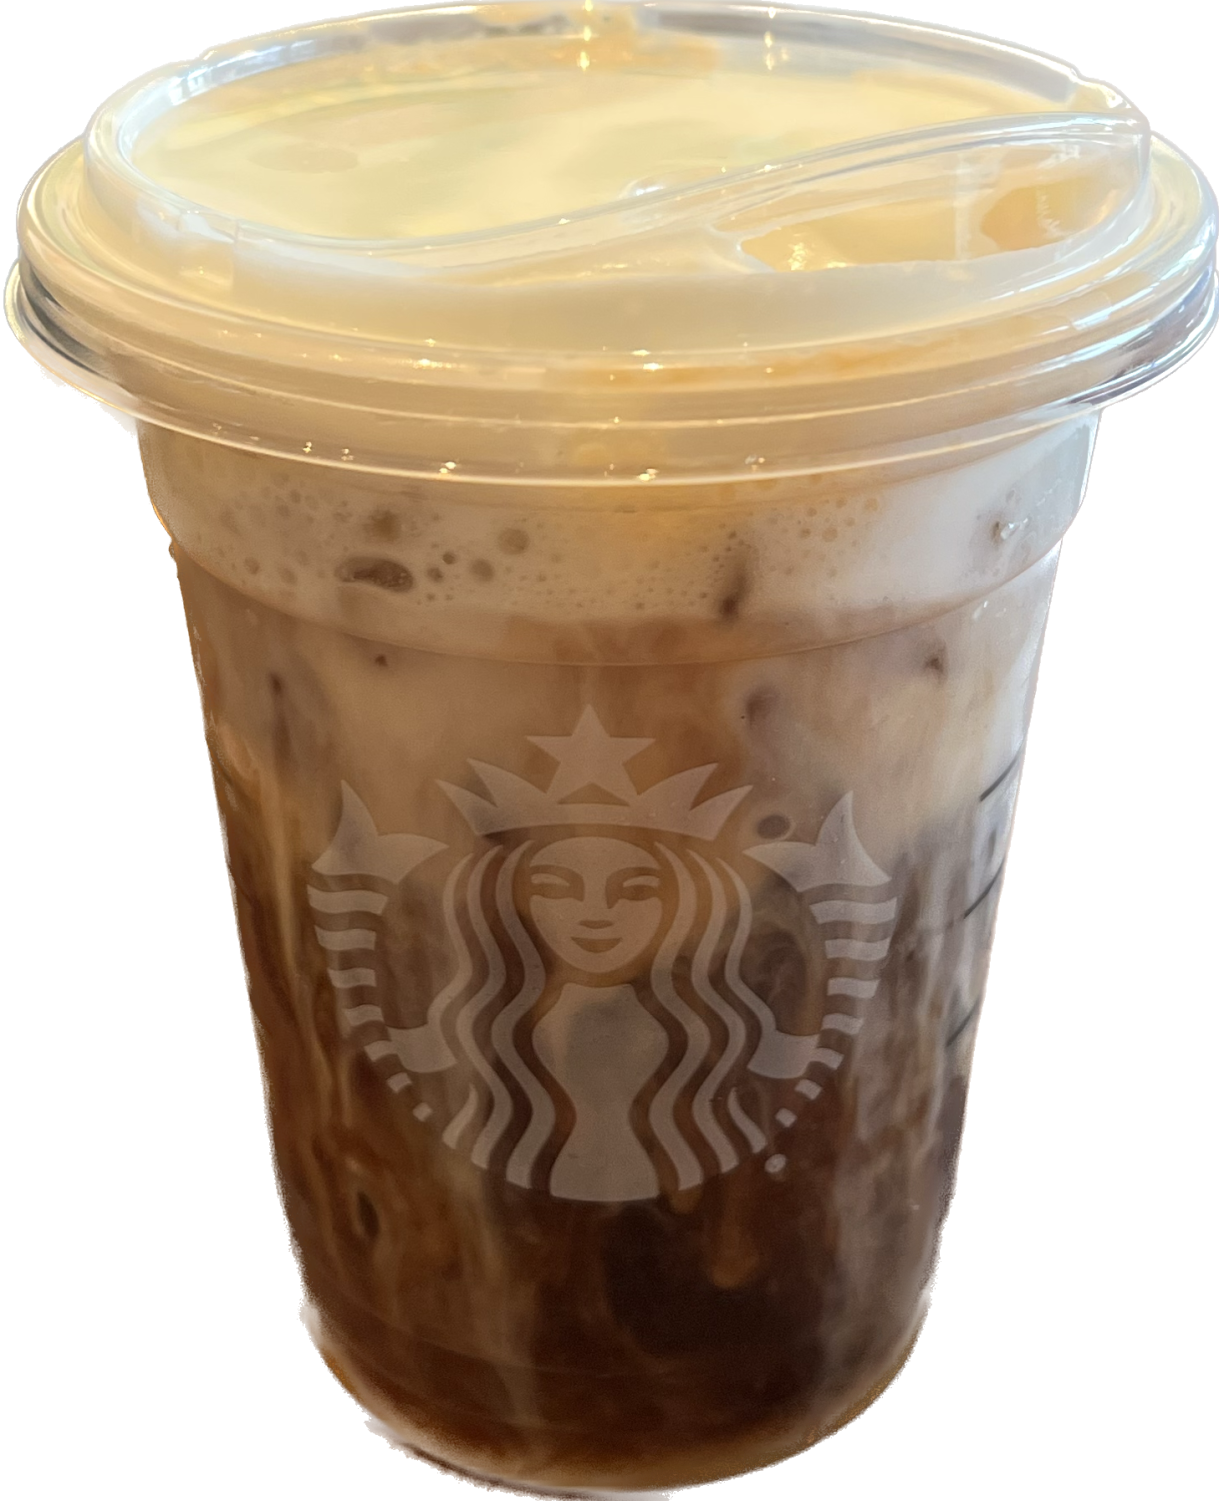 Staff picks favorite Starbucks drinks